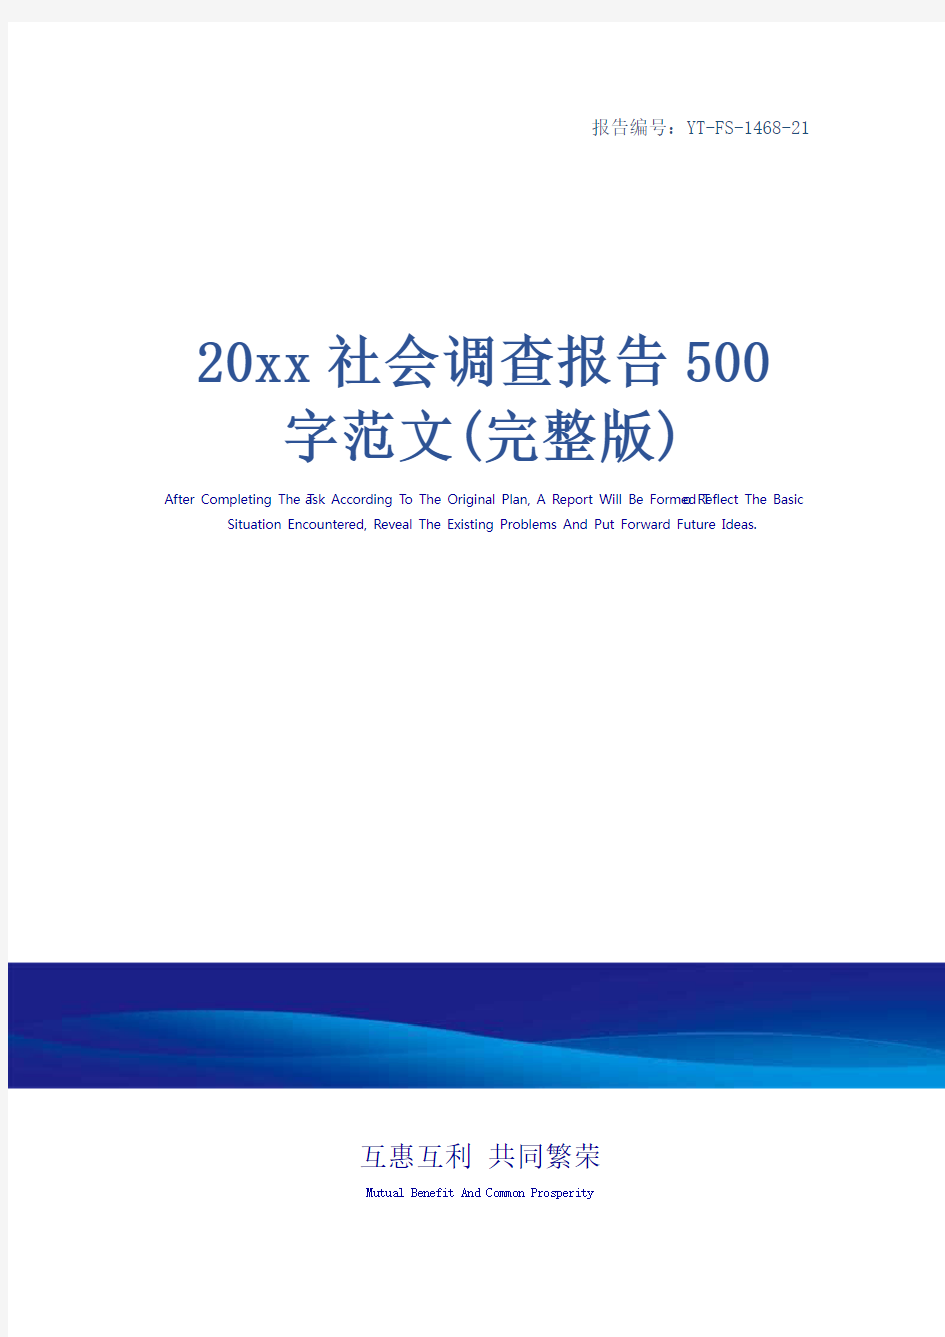 20xx社会调查报告500字范文(完整版)